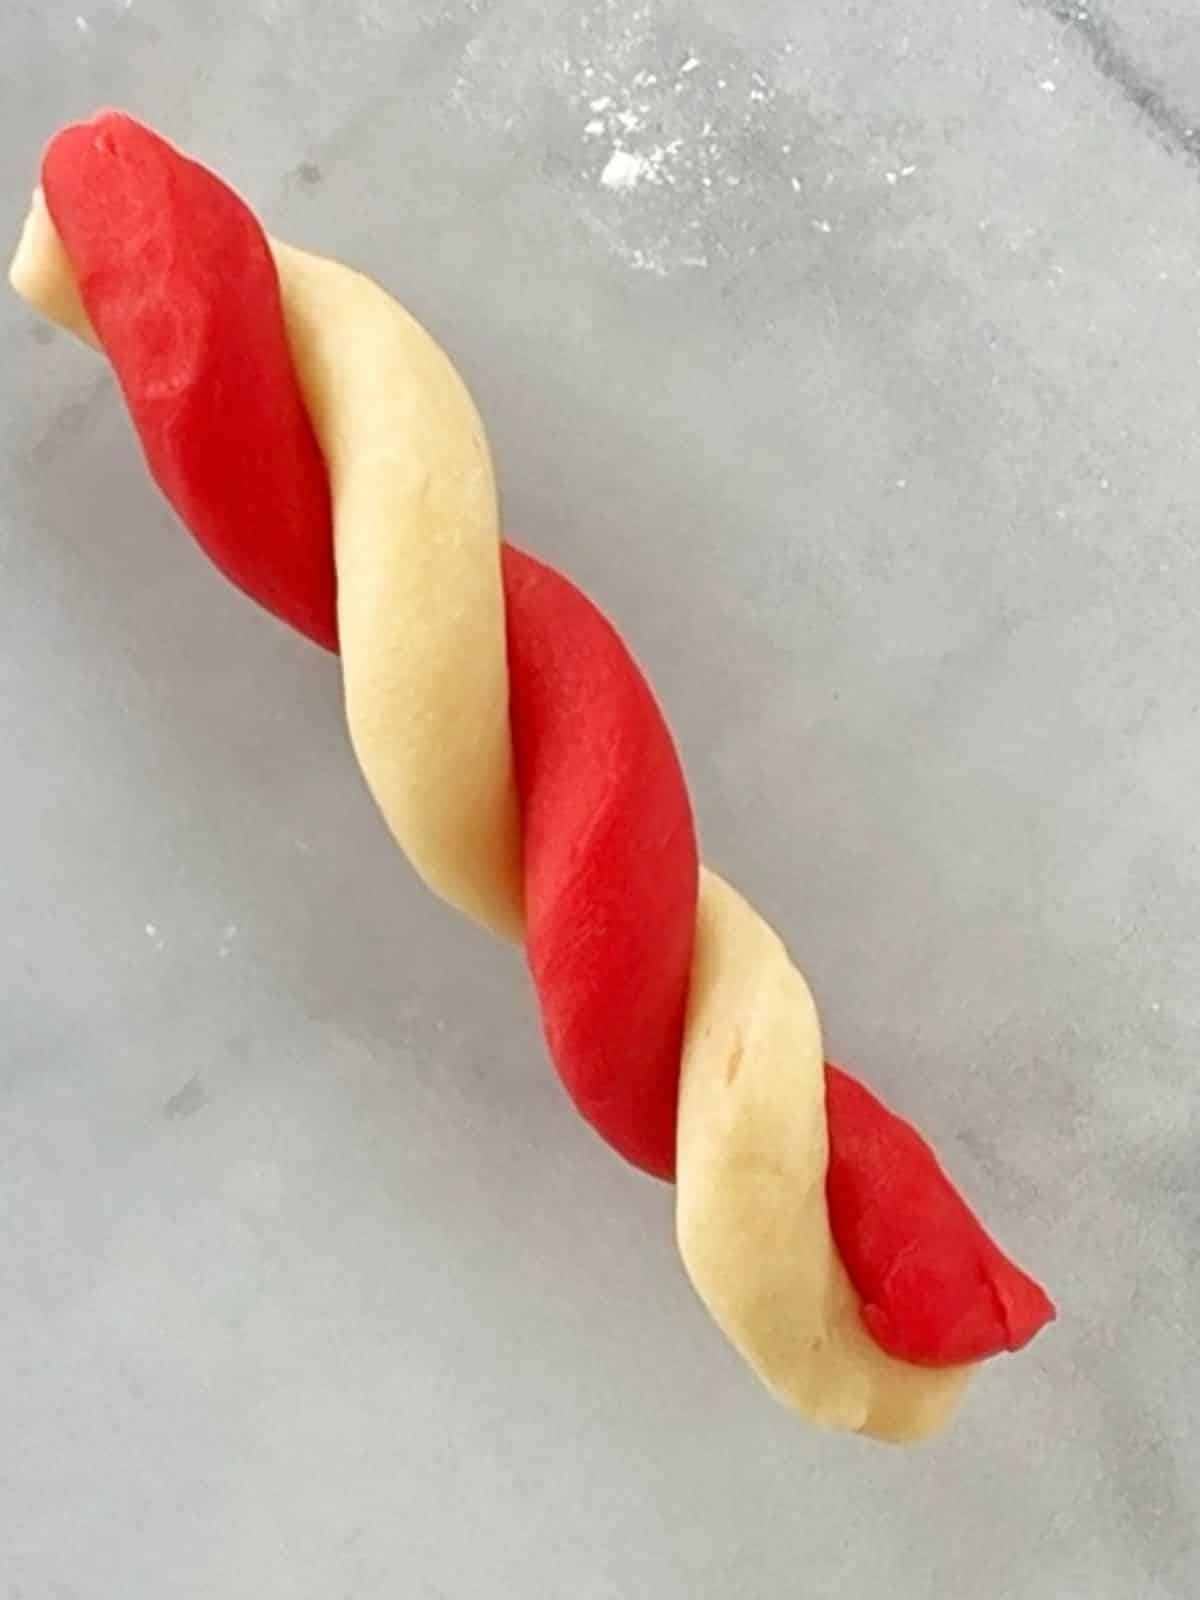 Twisting dough into candy cane shape.